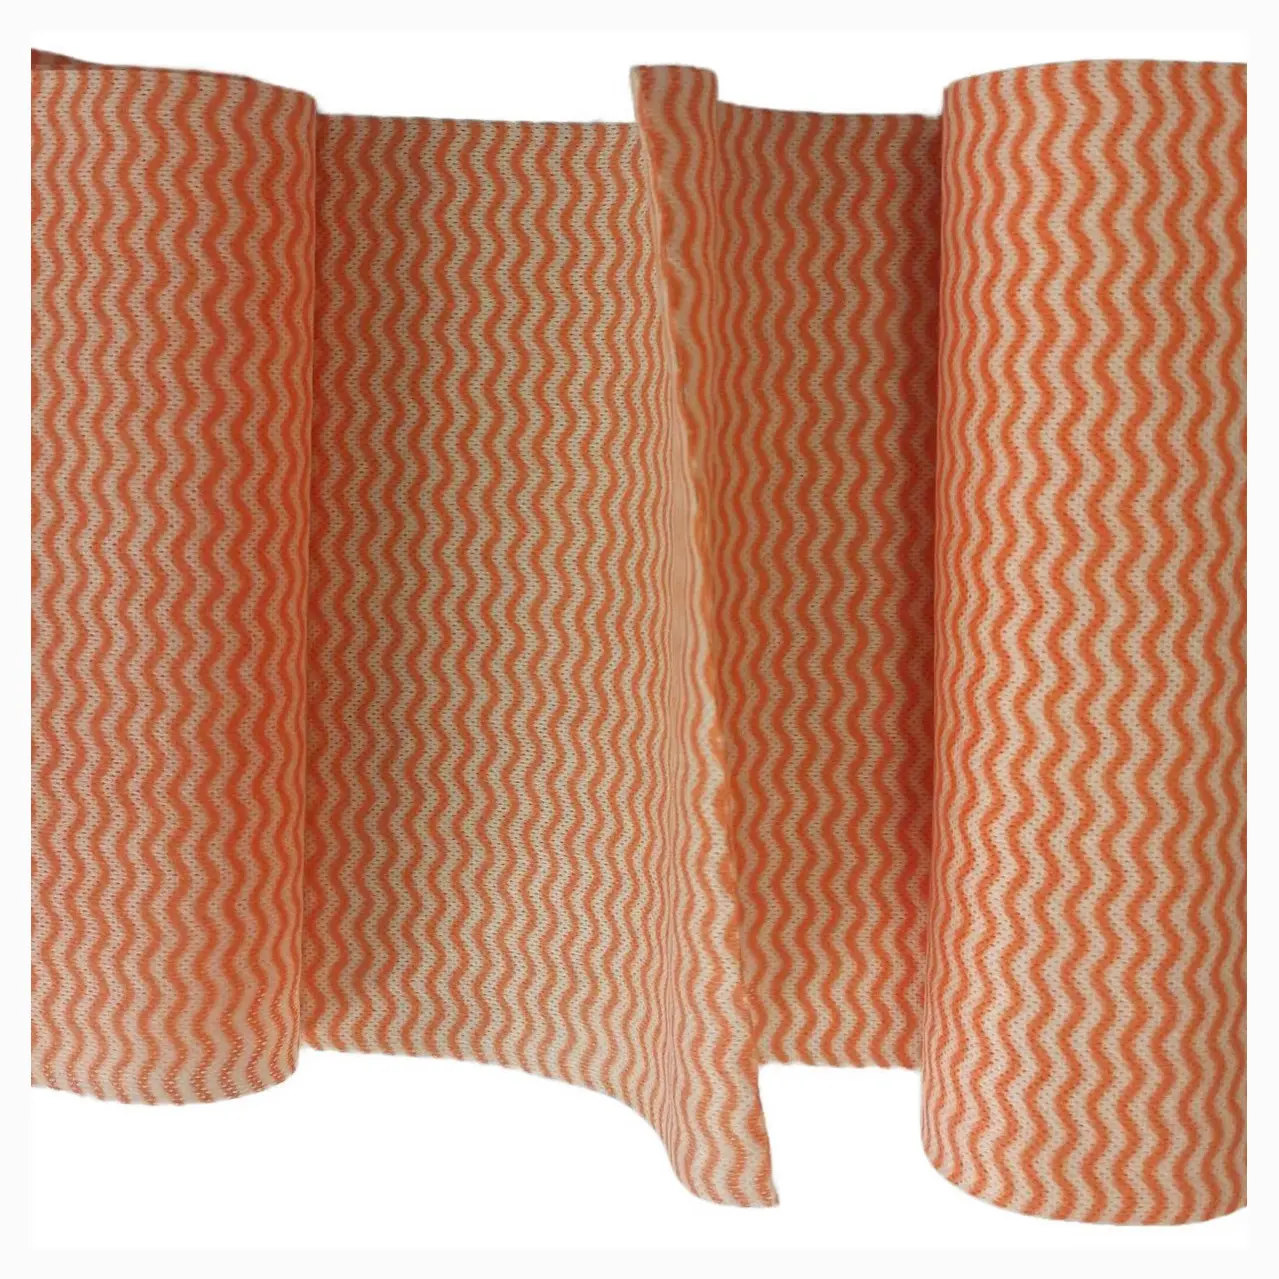 Toallitas secas no tejidas impresas con líneas onduladas